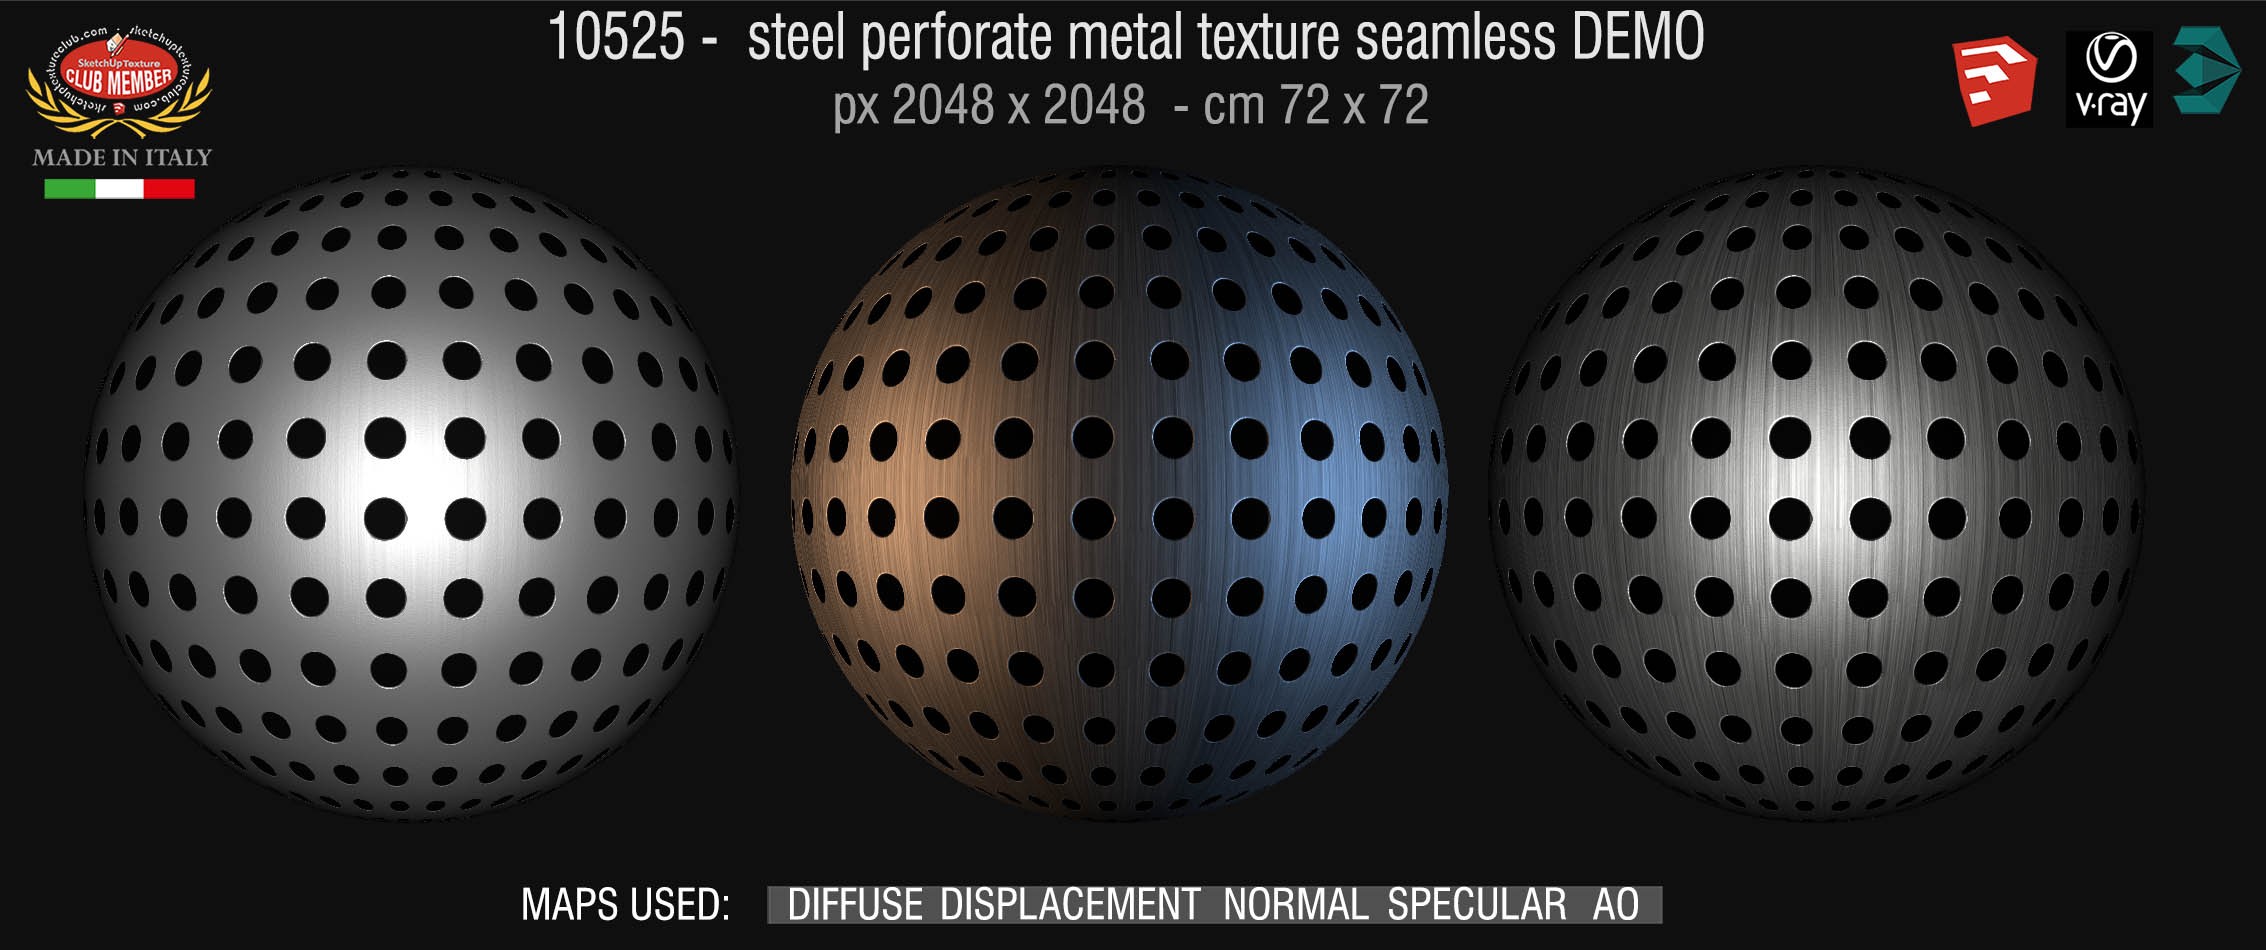 10525 HR Steel perforate metal texture seamless + maps DEMO